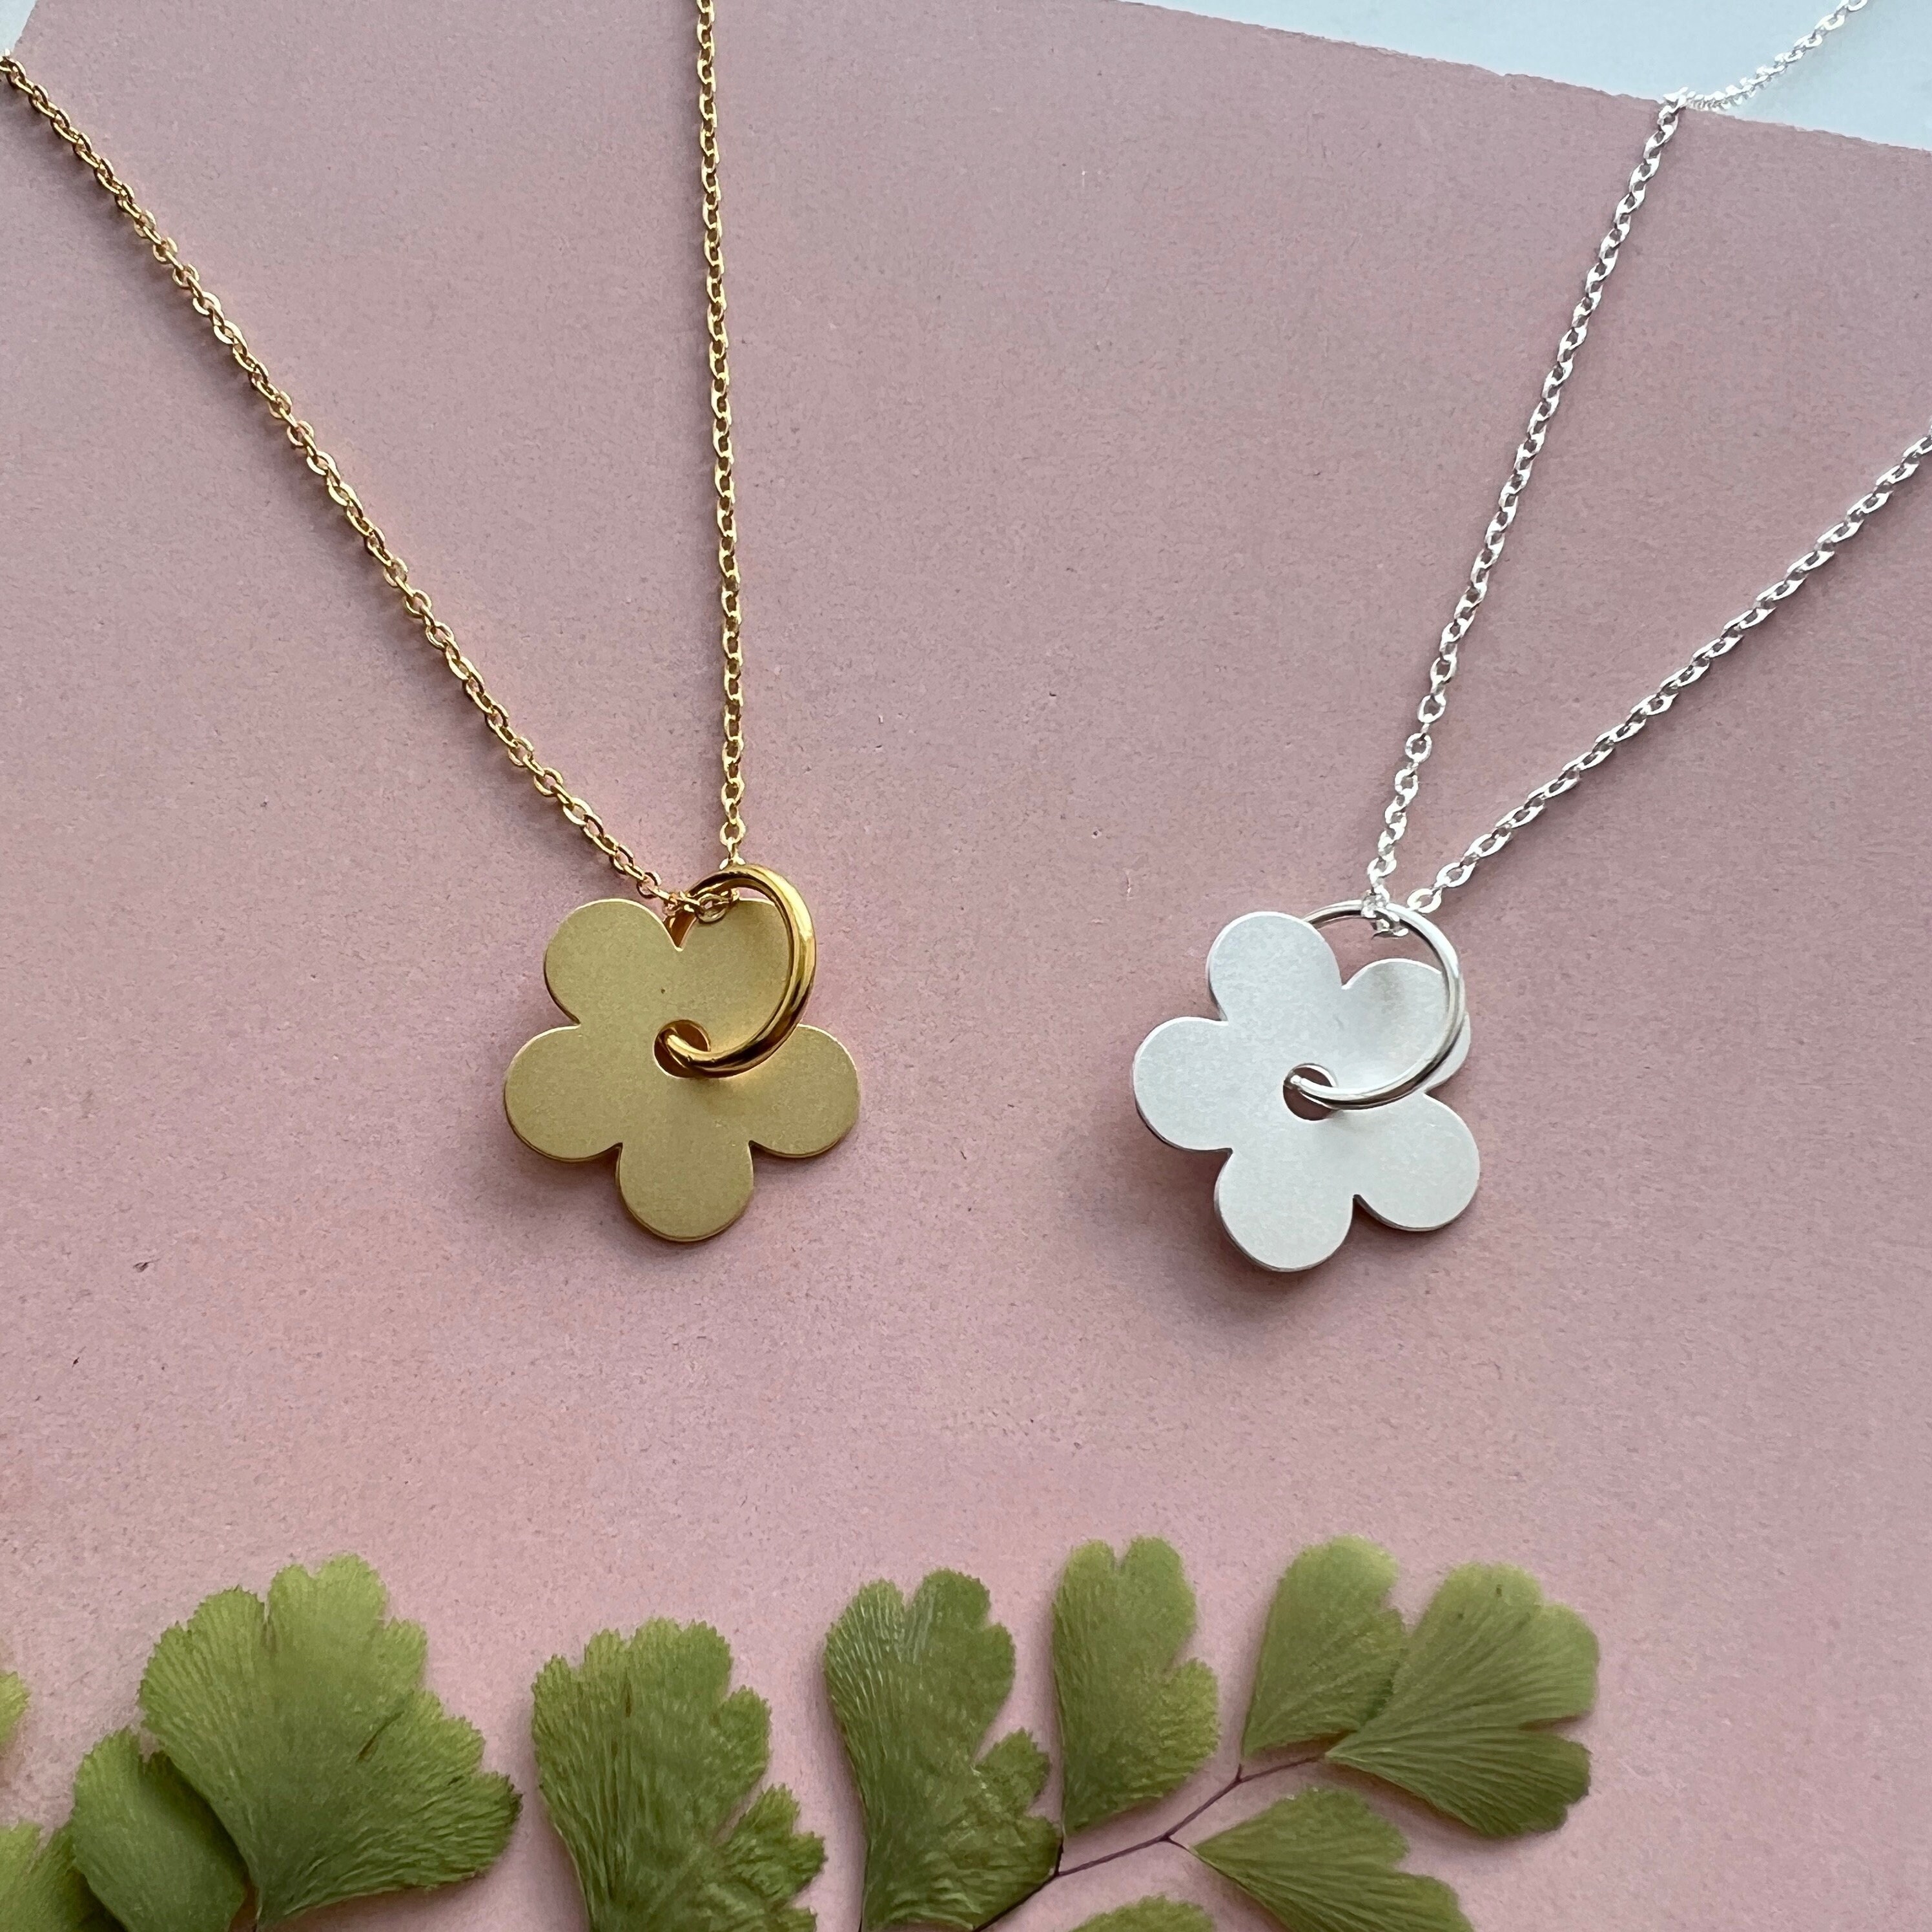 Mini Flower Necklace - Simple Floral Pendant Gold & Silver Options